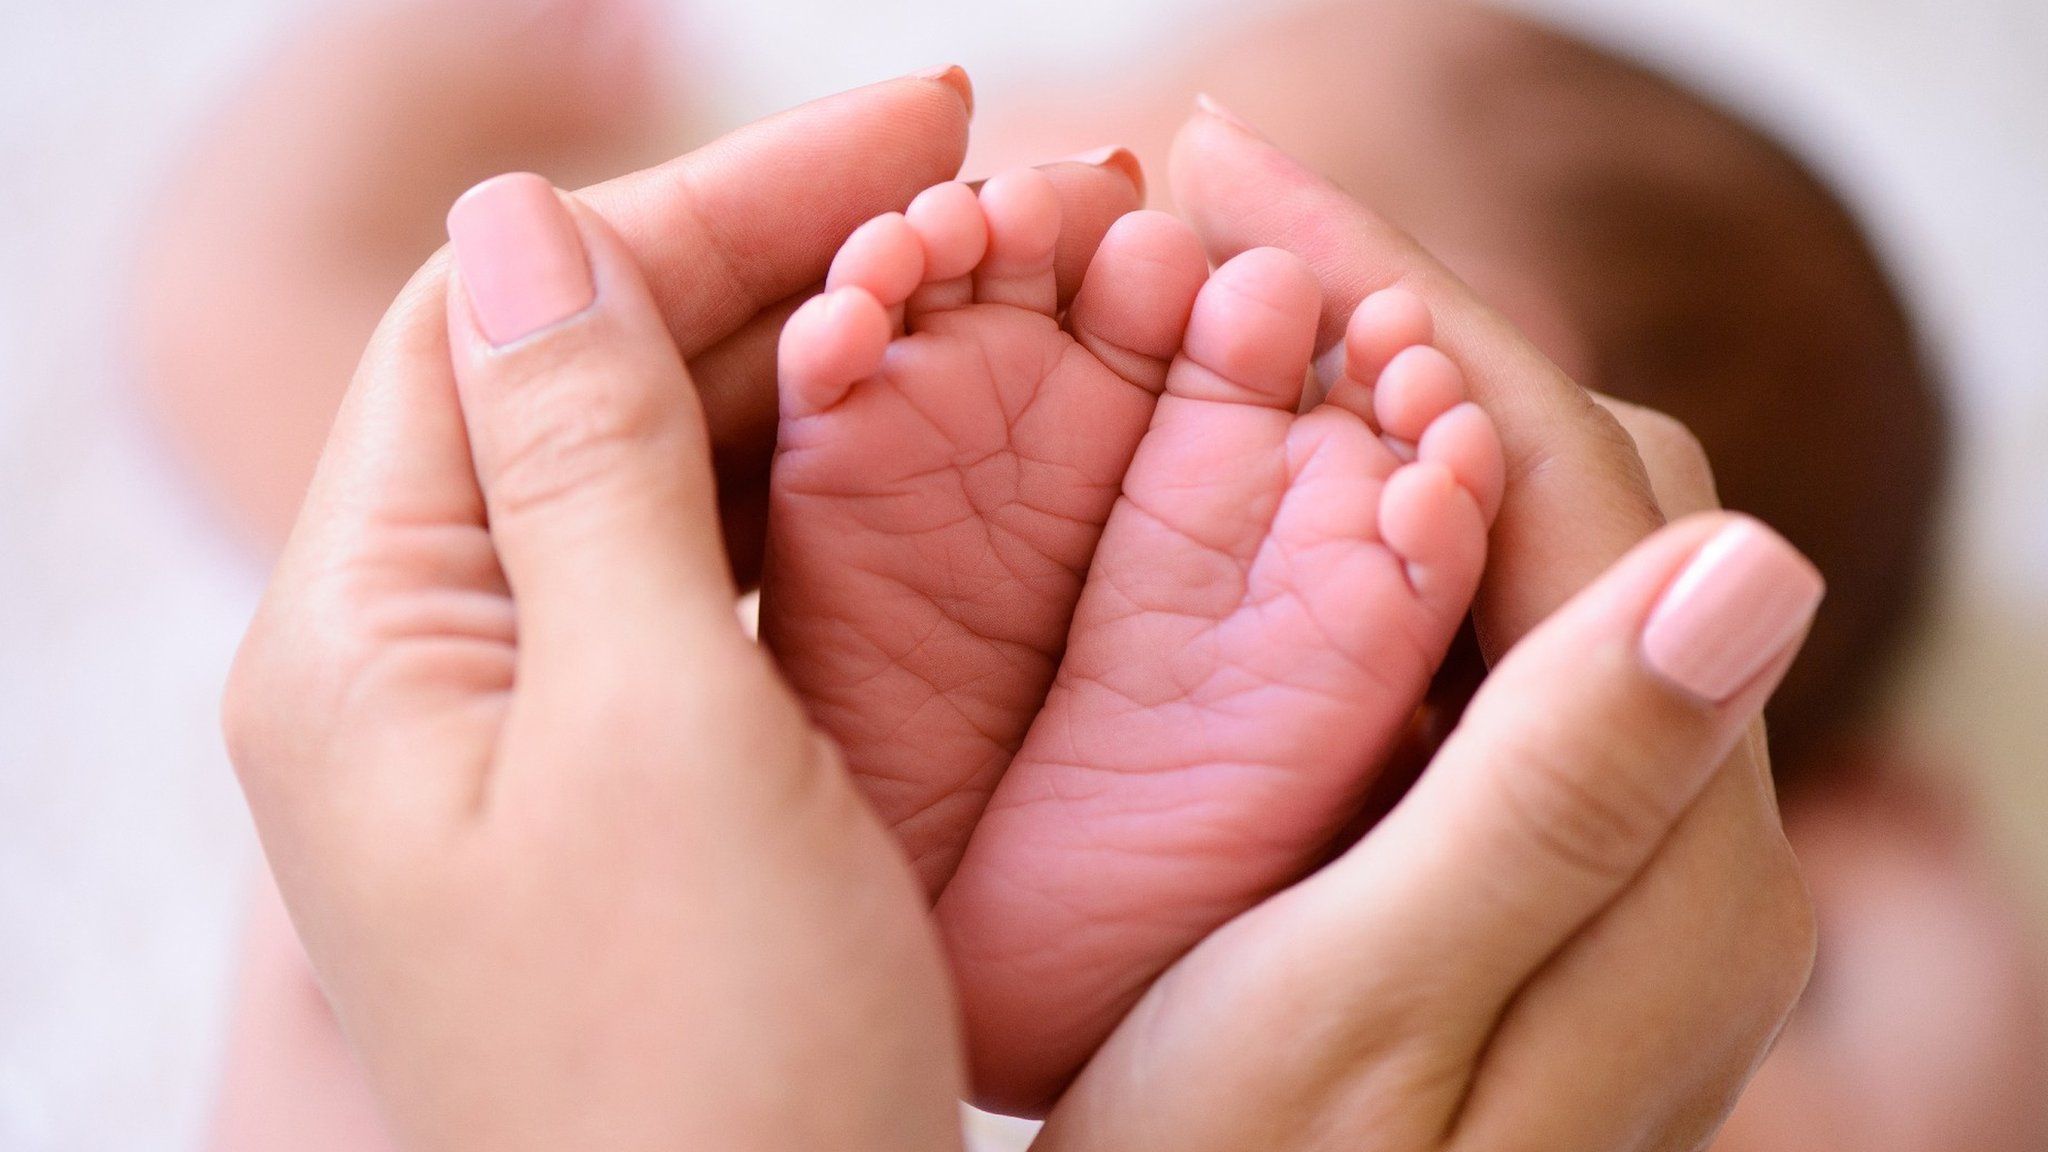 Baby's feet being held in adult hands